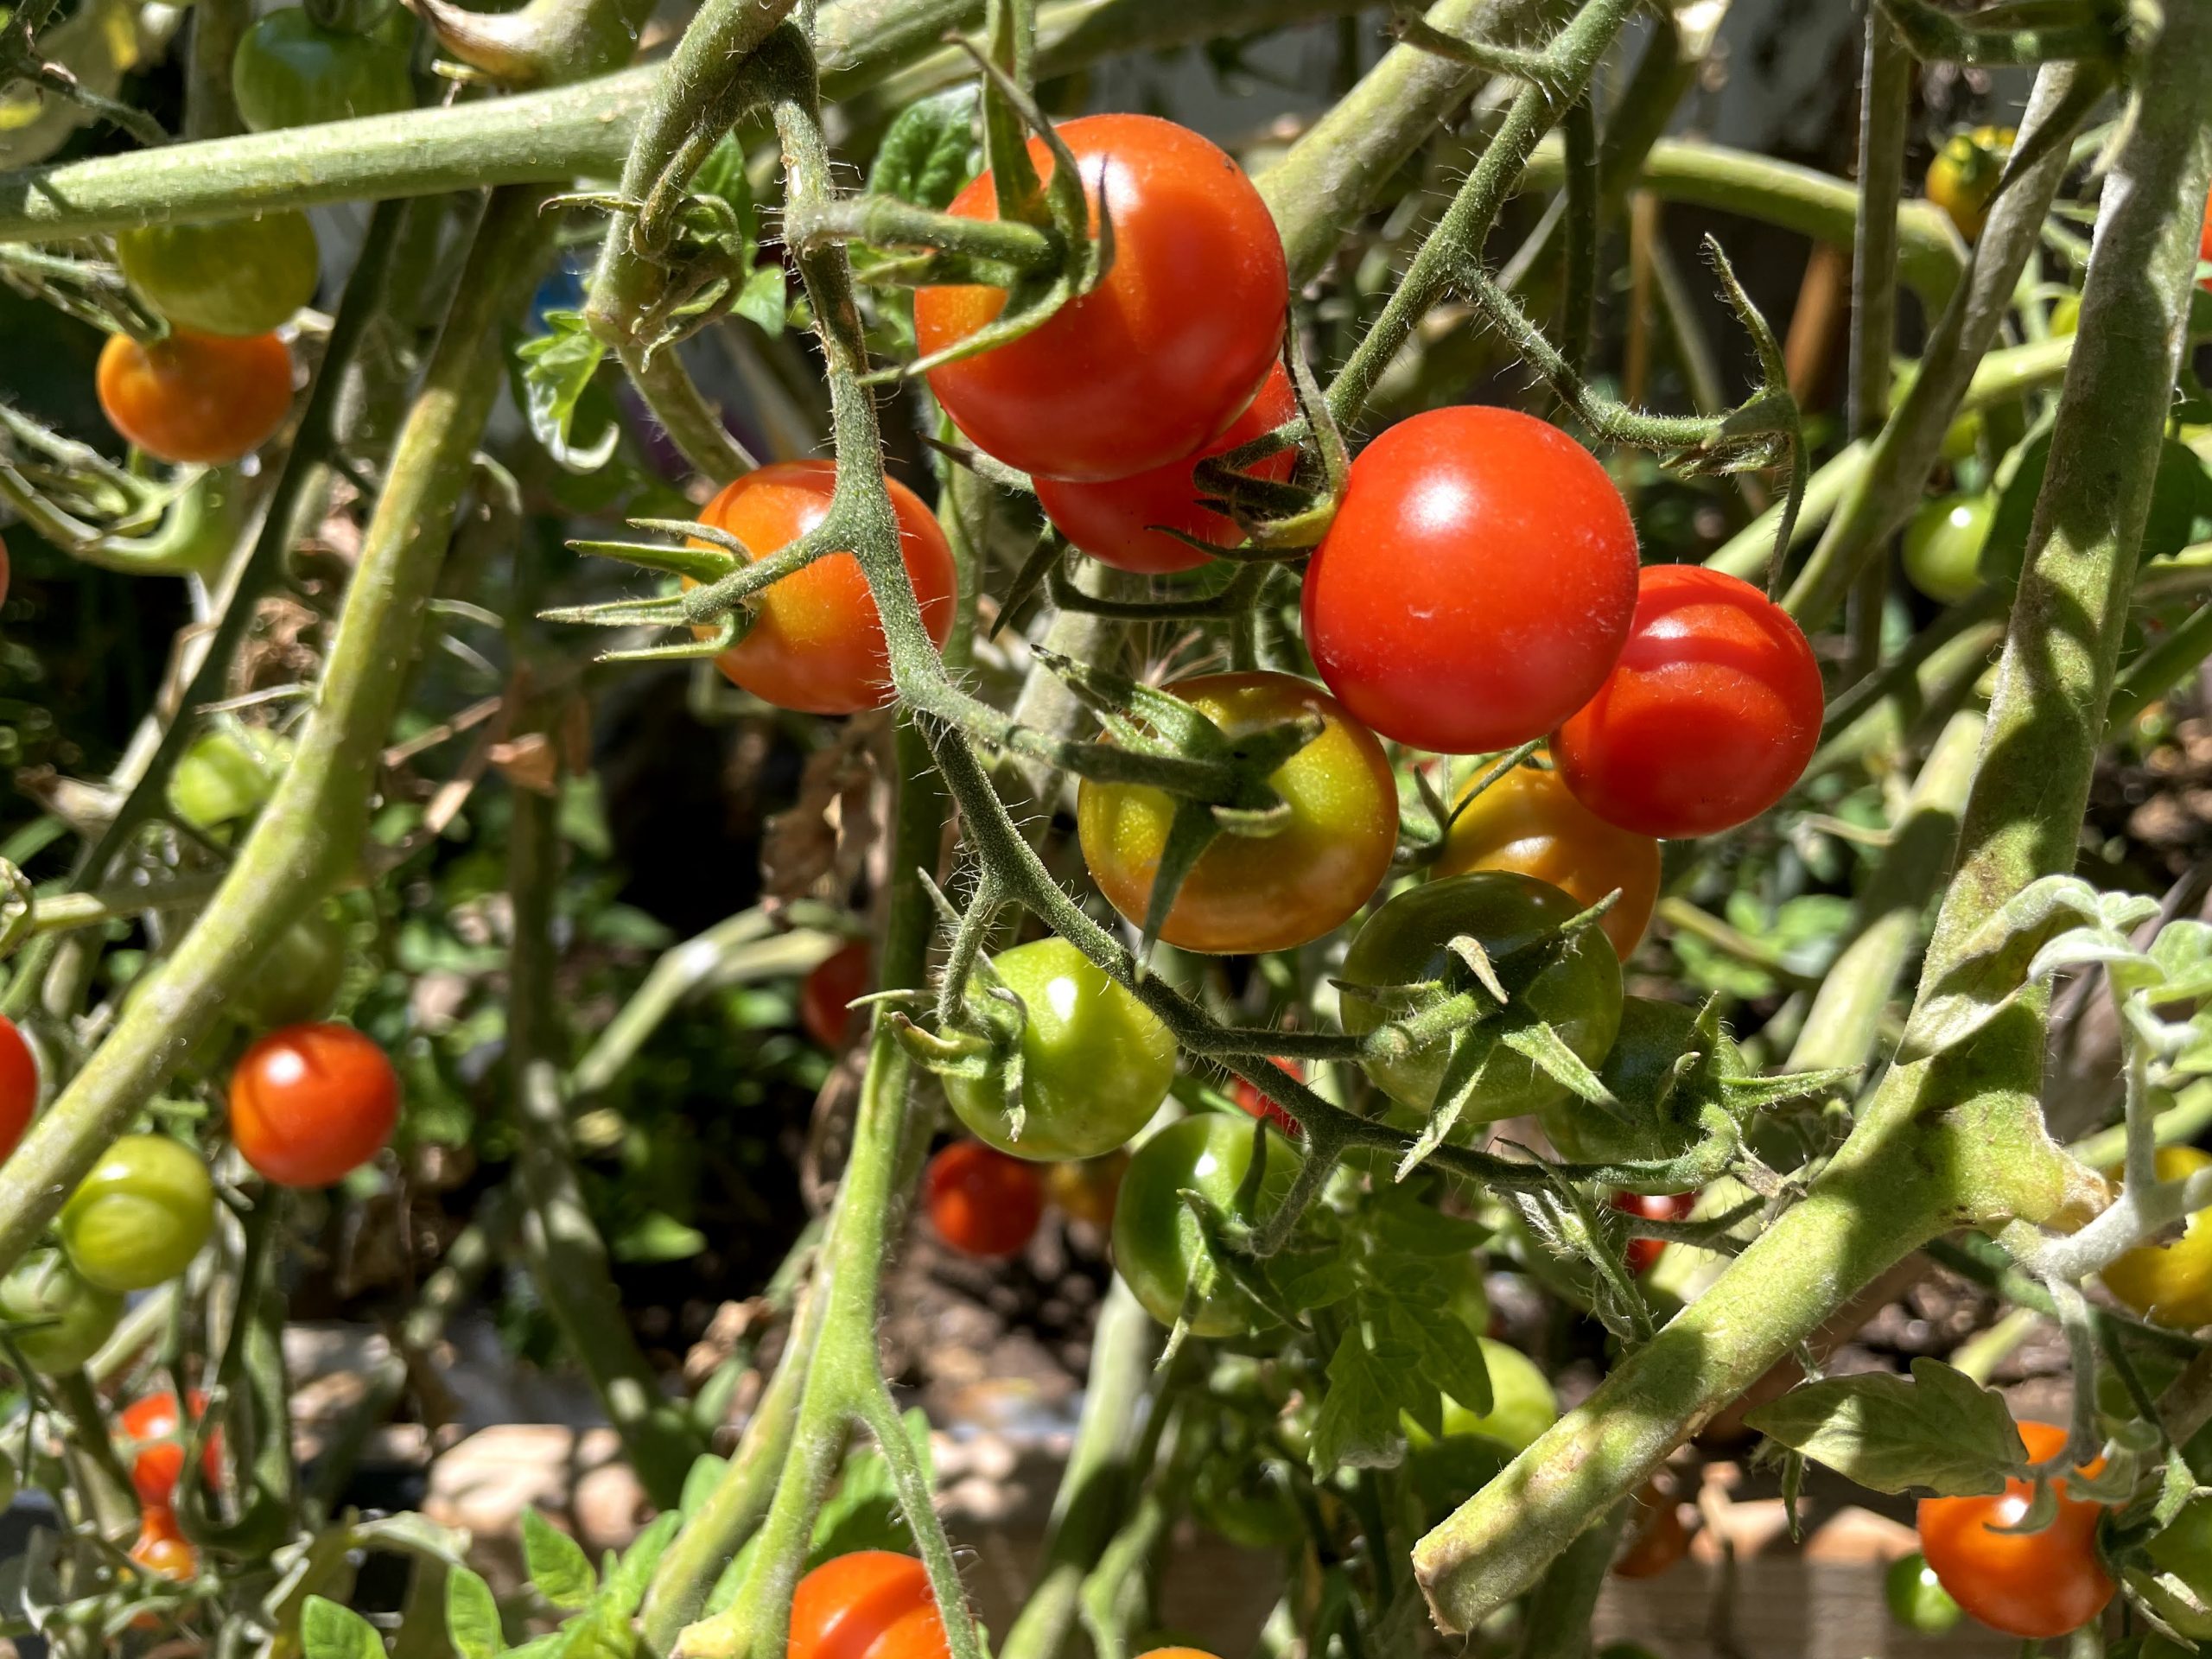 Cherry tomatoes galore!